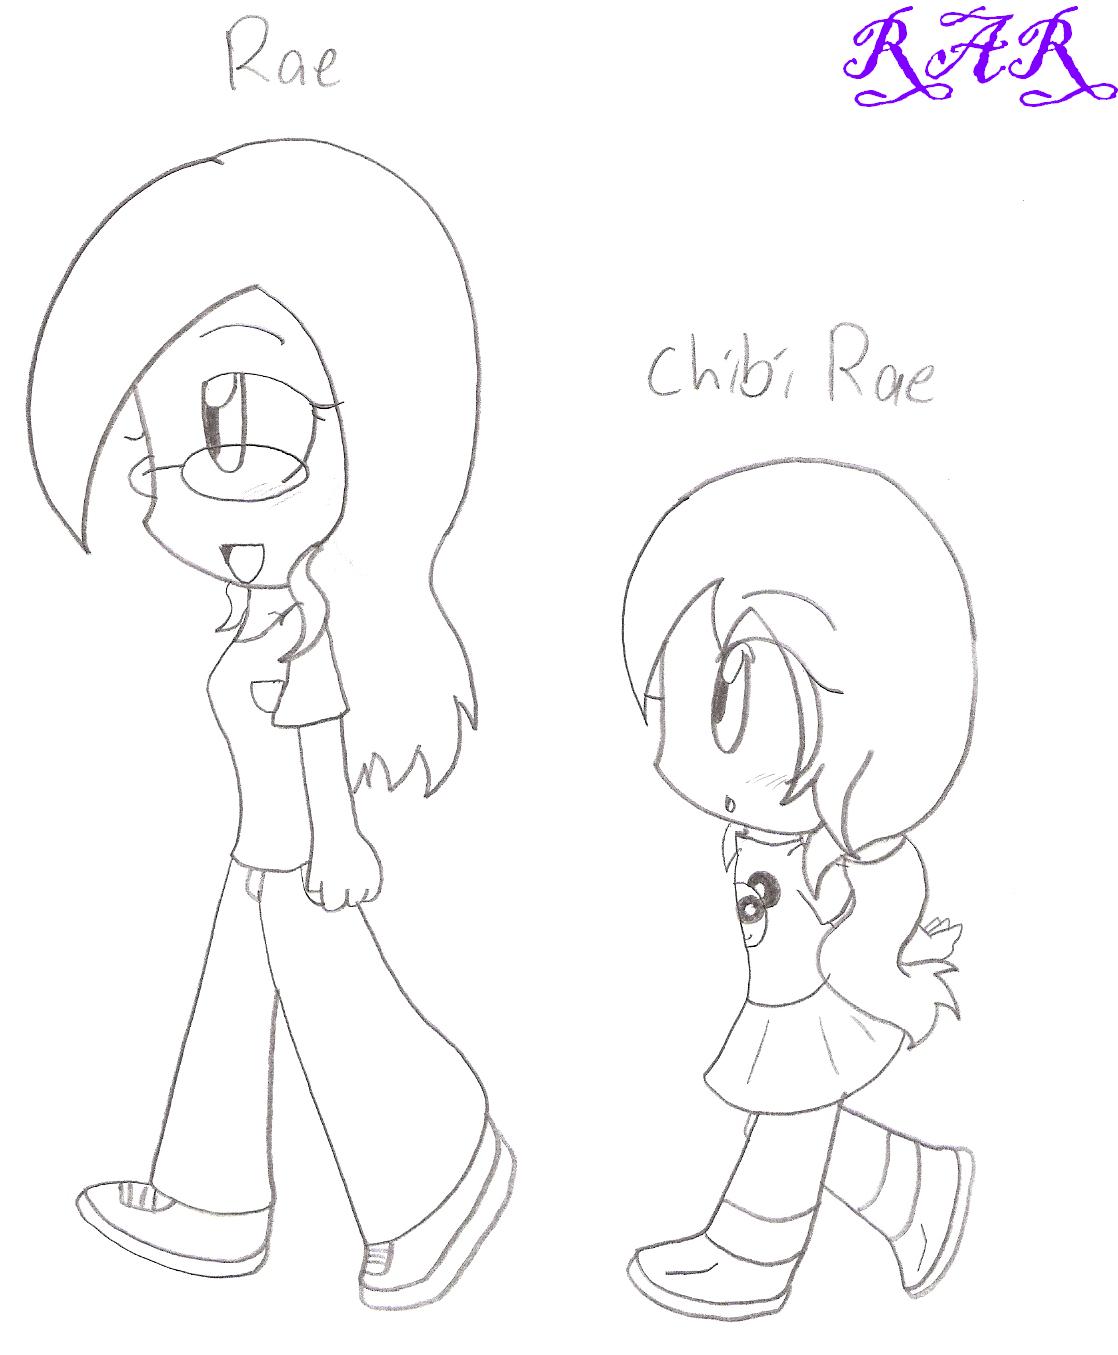 Rae and Chibi-Rae by RaeAshleyRodri